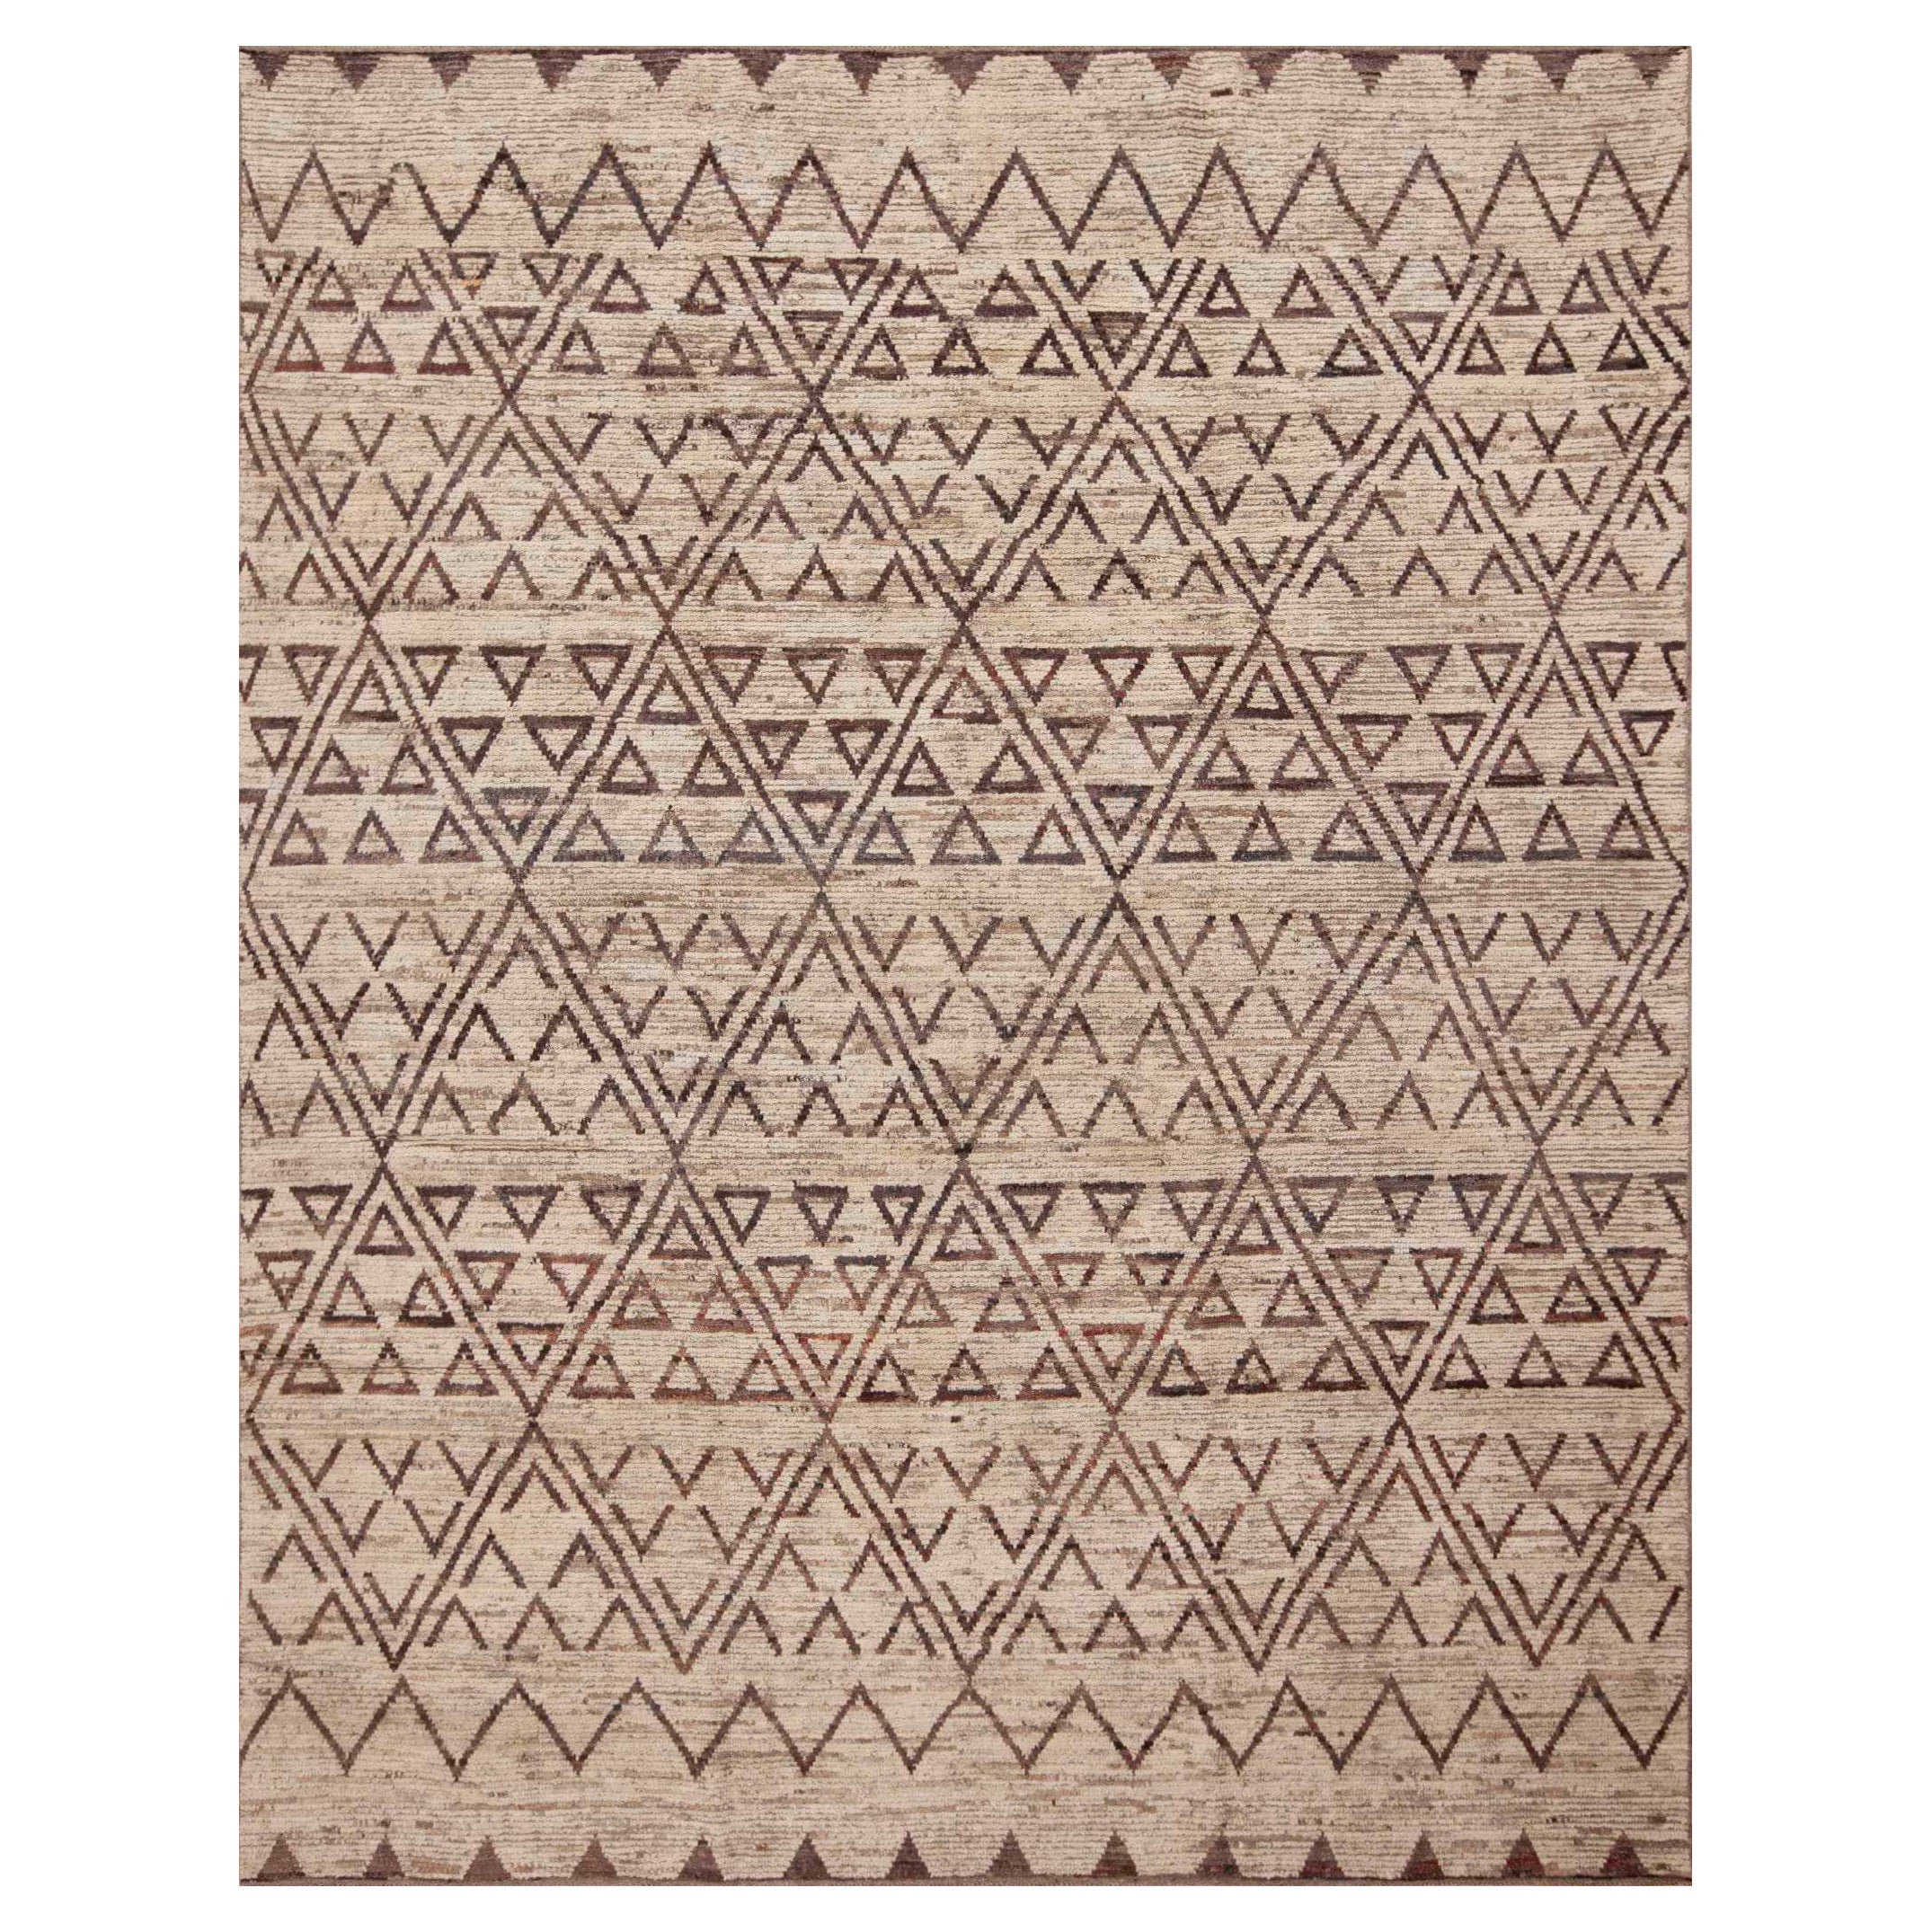 Nazmiyal Kollektion Stammeskunst Nomadic Geometric Design Moderner Teppich 9'6" x 11'10" im Angebot